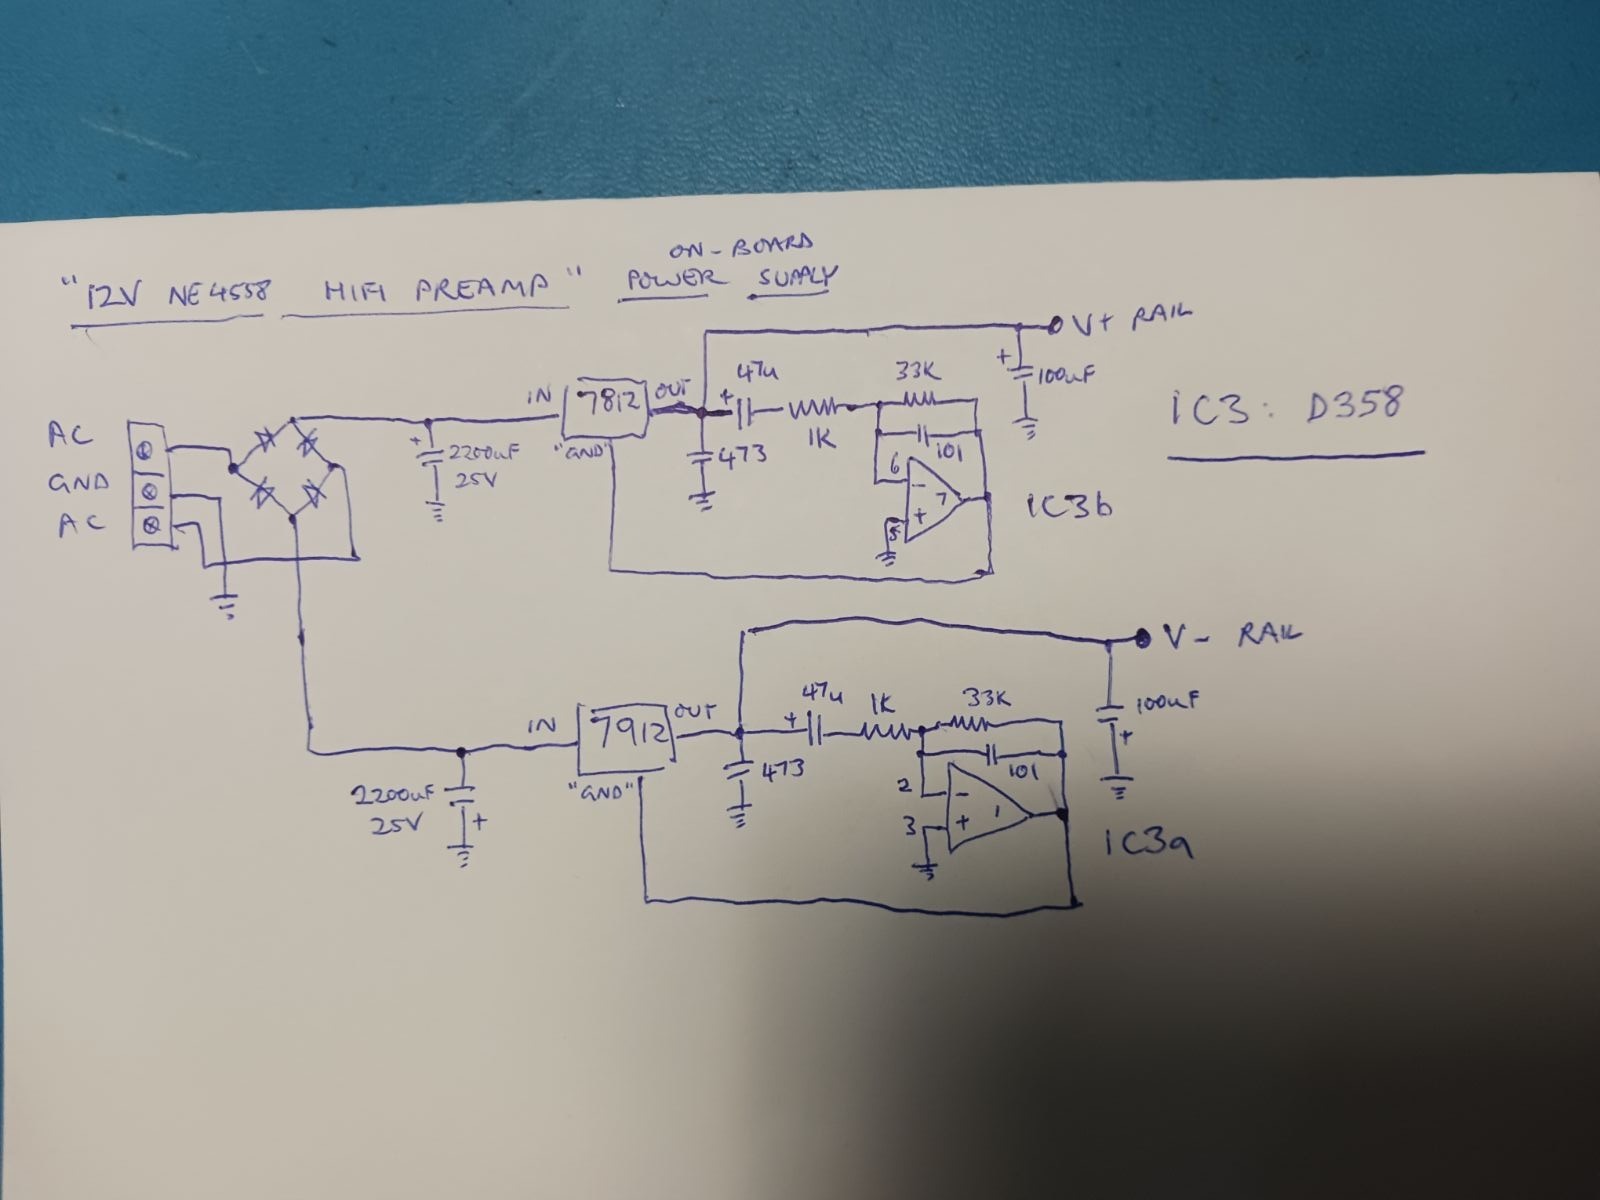 JRC4558 tone control board power supply.jpeg